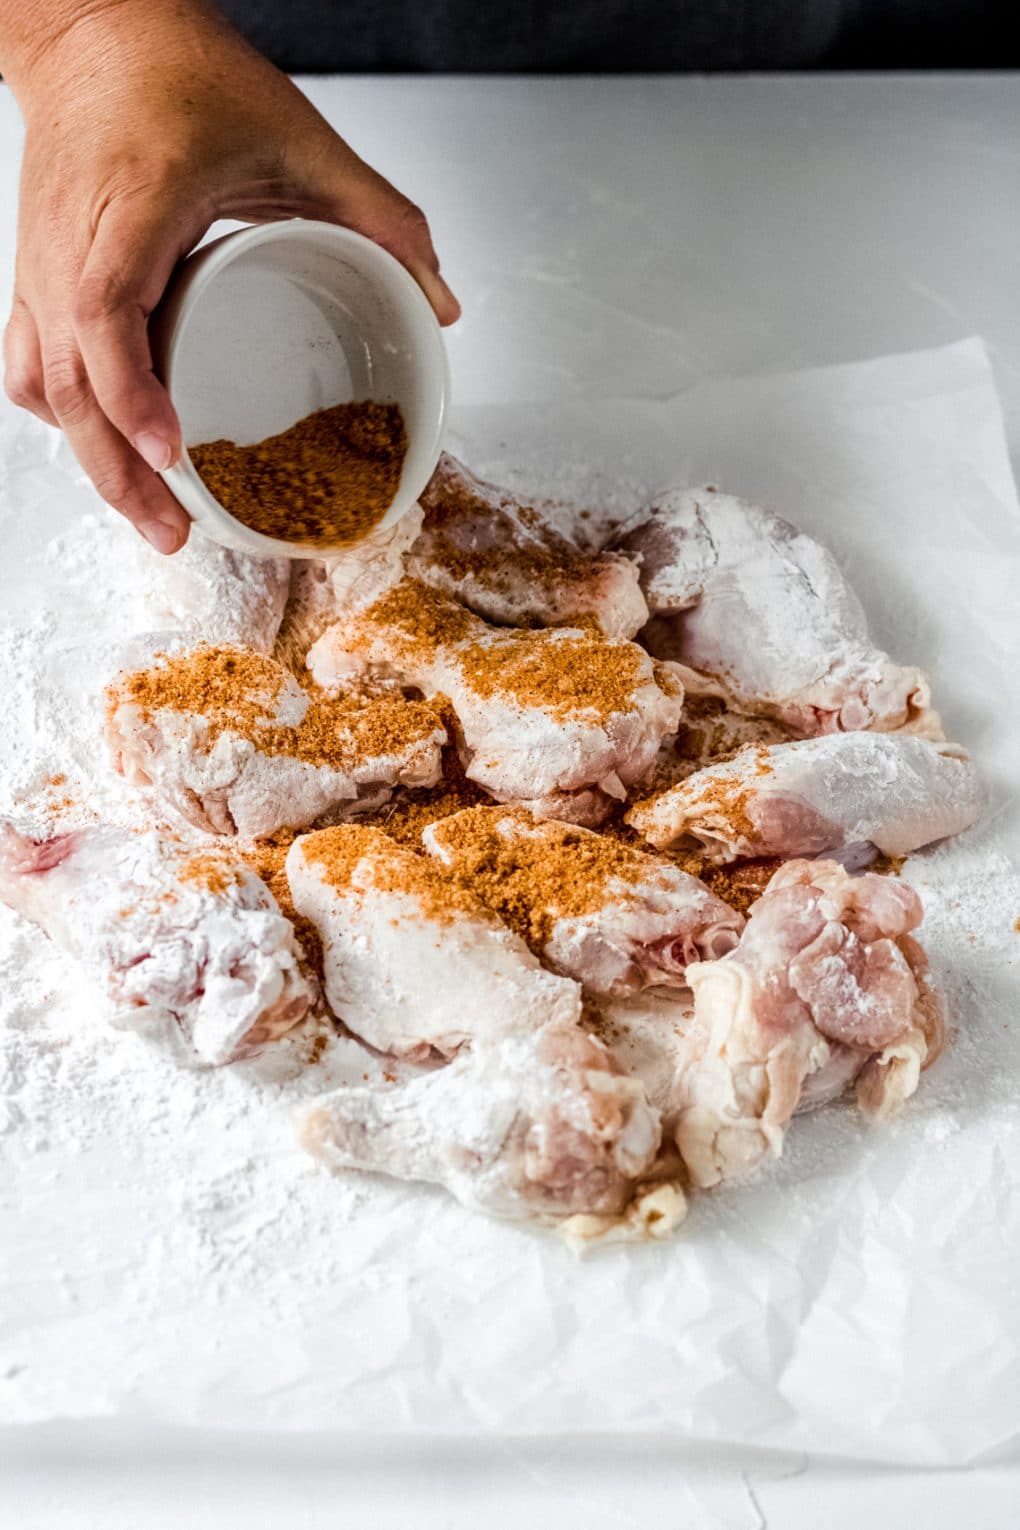 raw chicken wings with cajun seasoning rub being sprinkled onto them